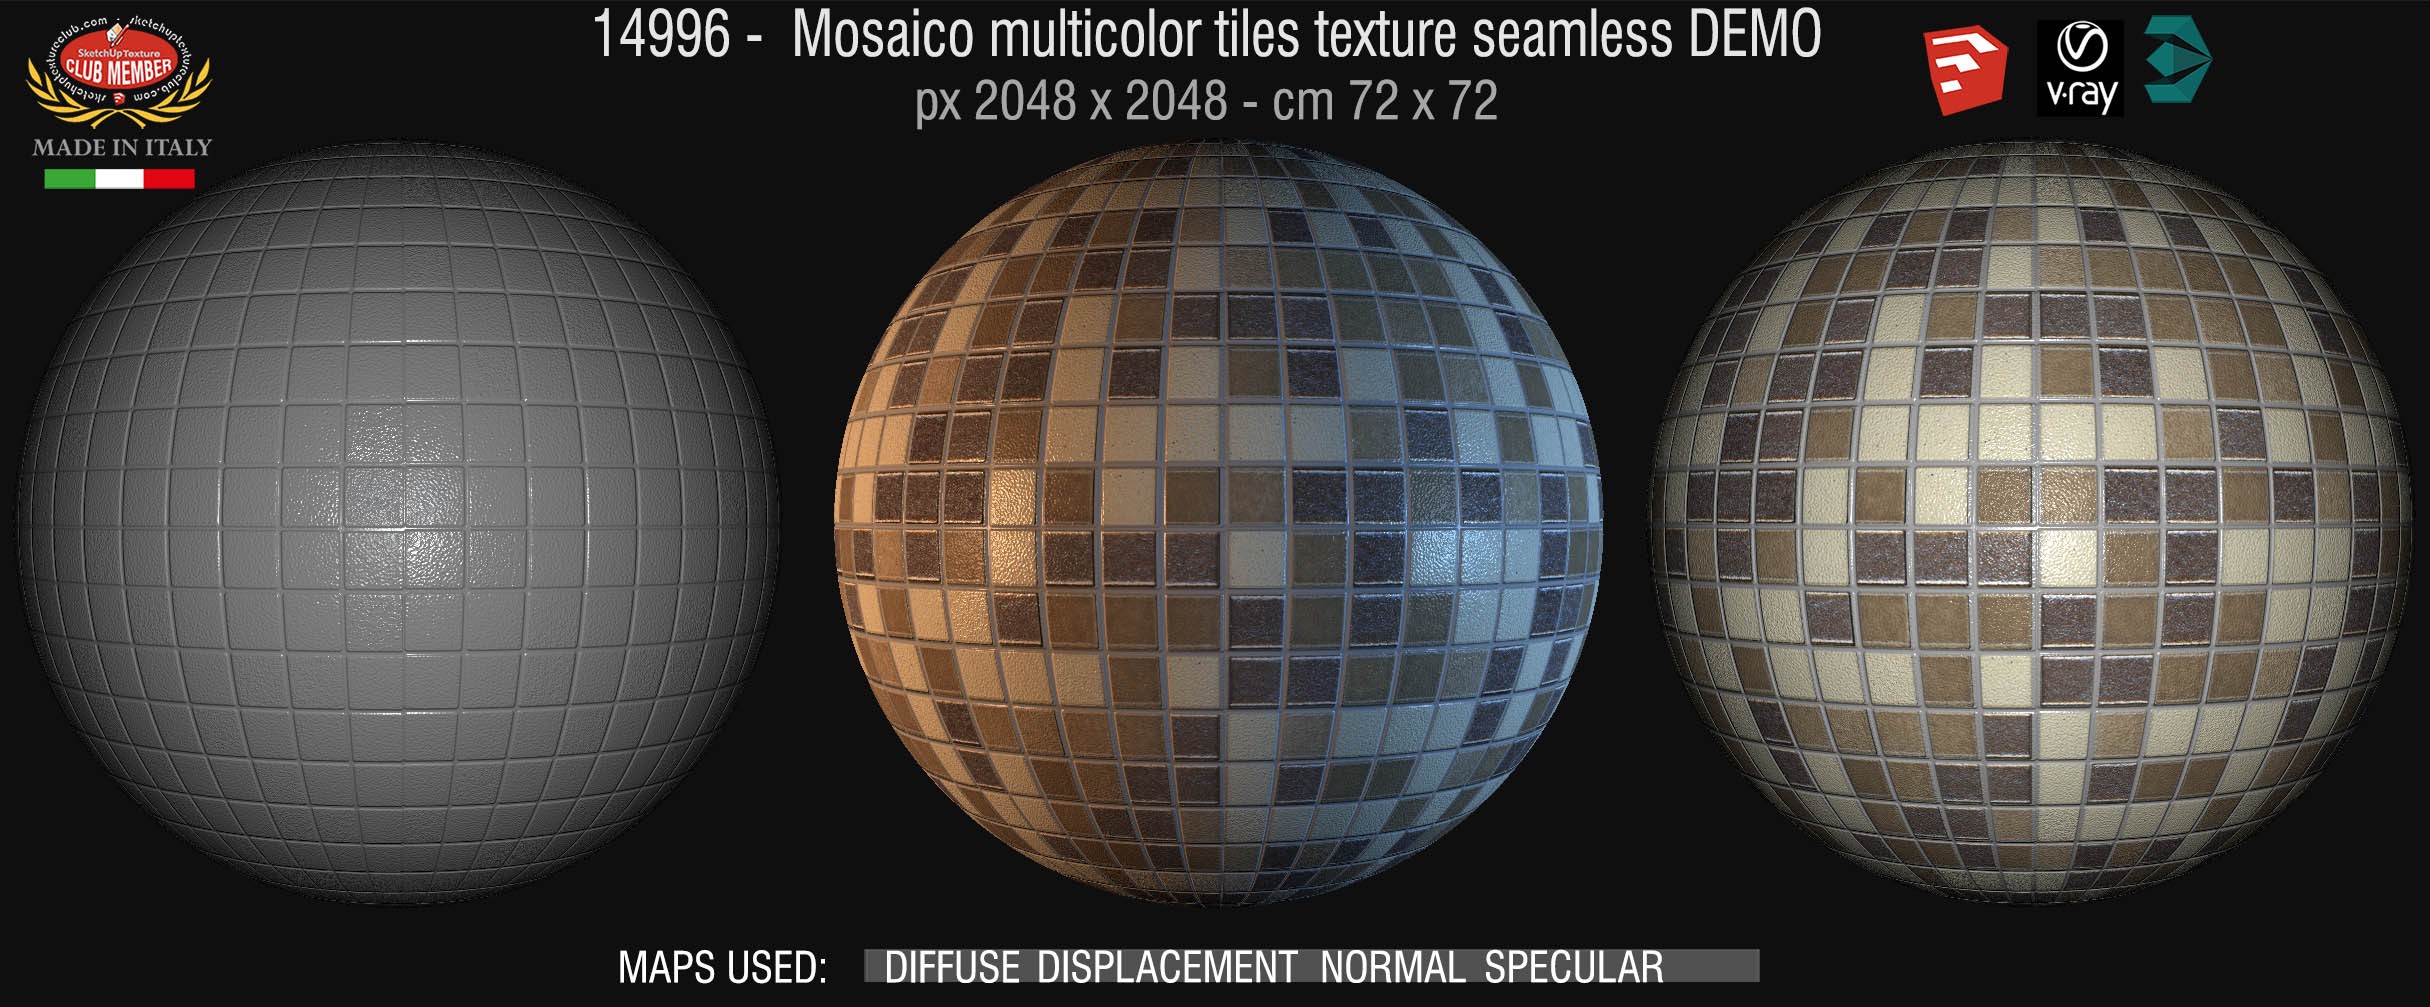 14996 Mosaico multicolor tiles texture seamless + maps DEMO